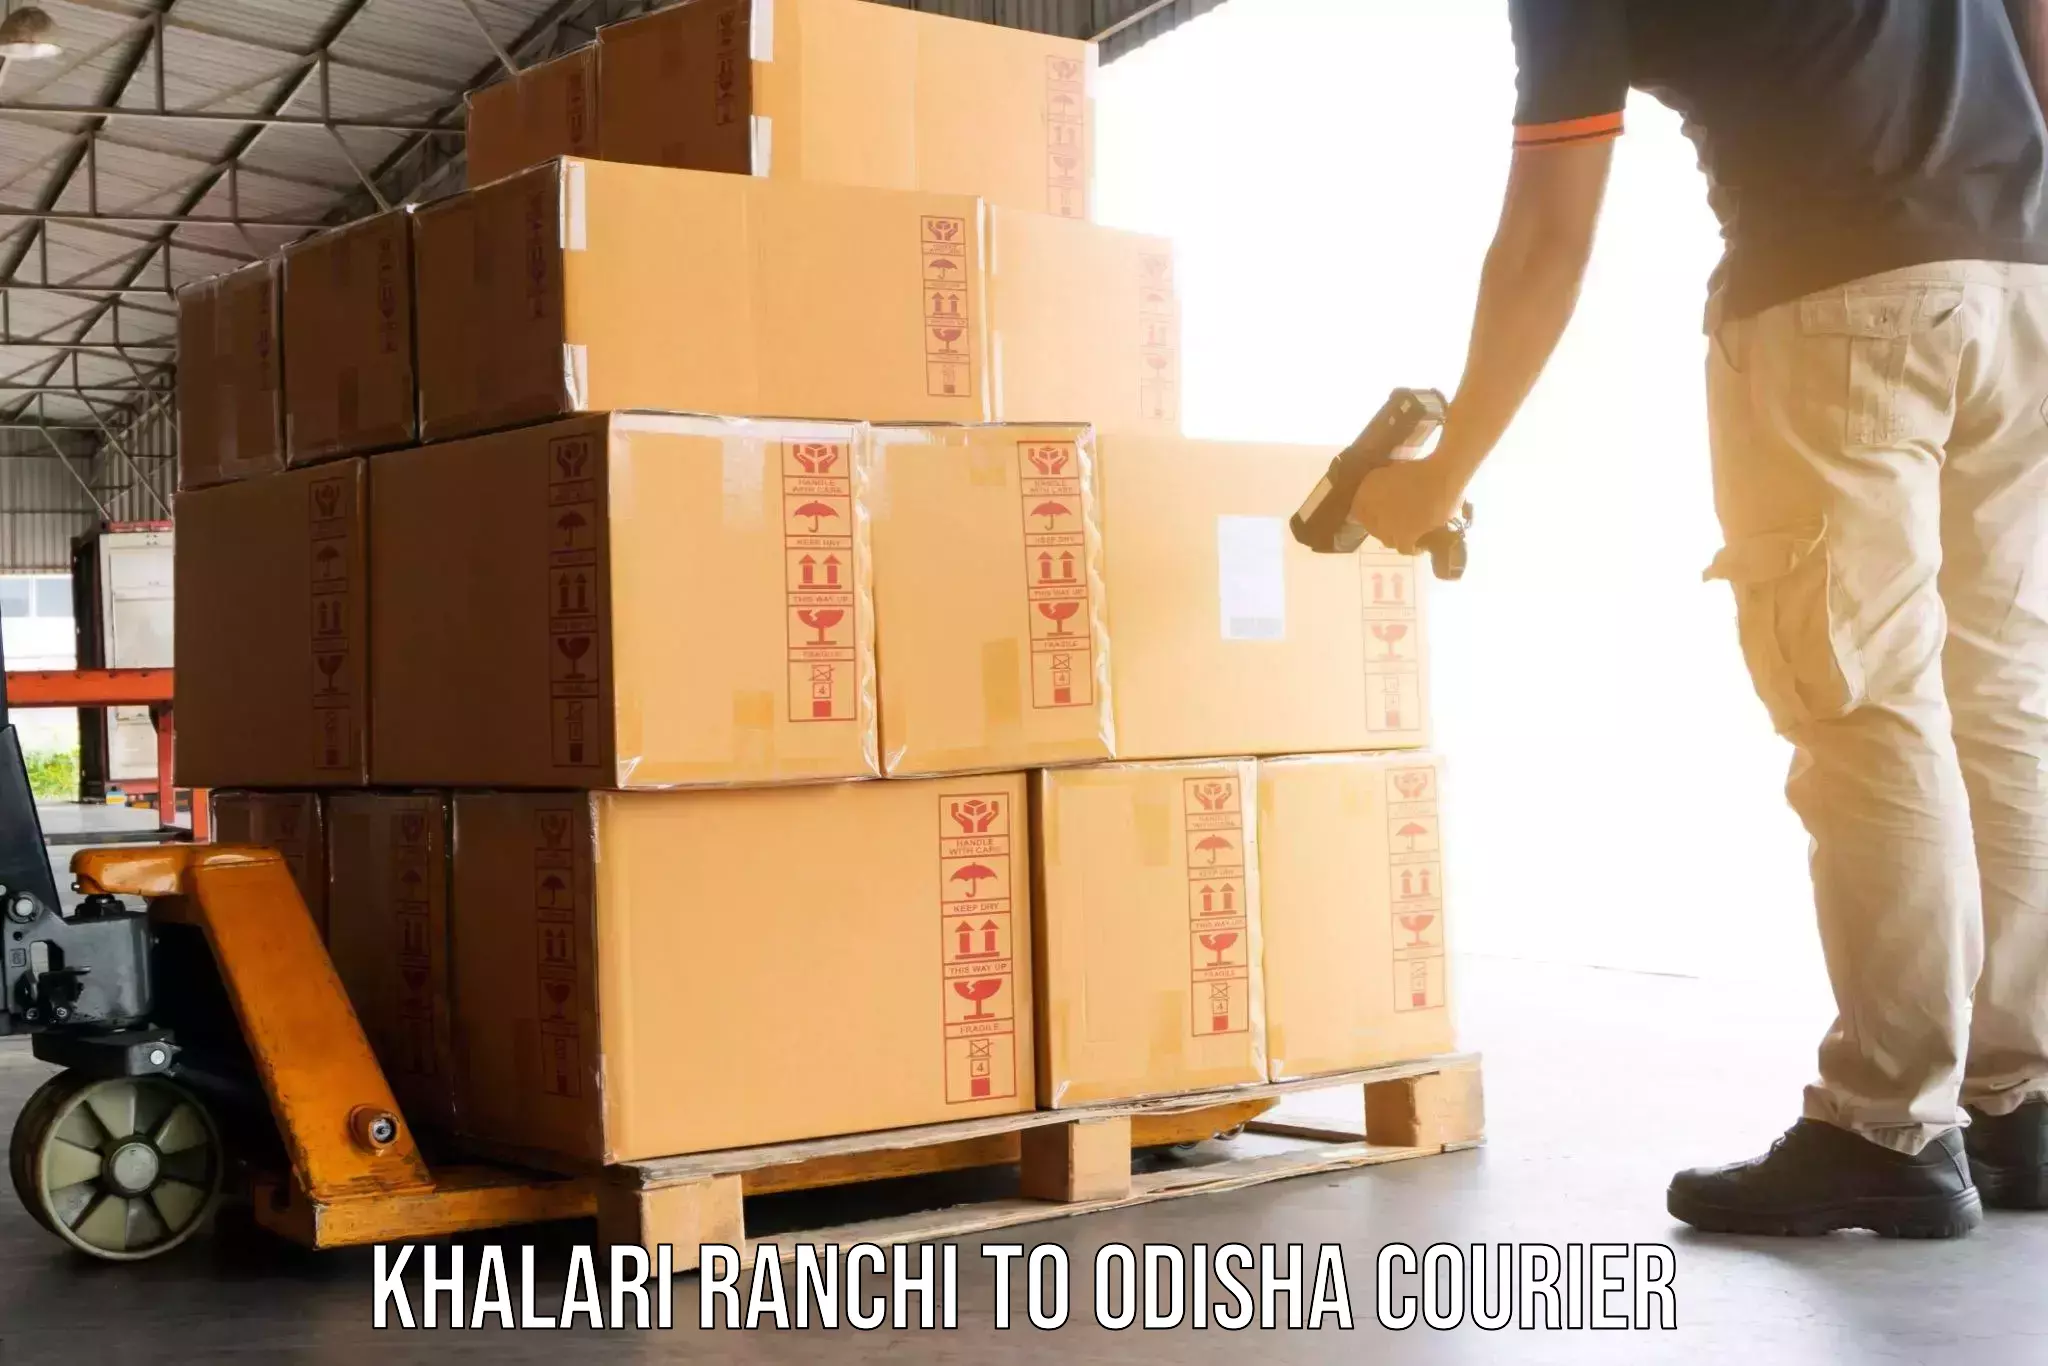 Moving and storage services in Khalari Ranchi to Puranakatak